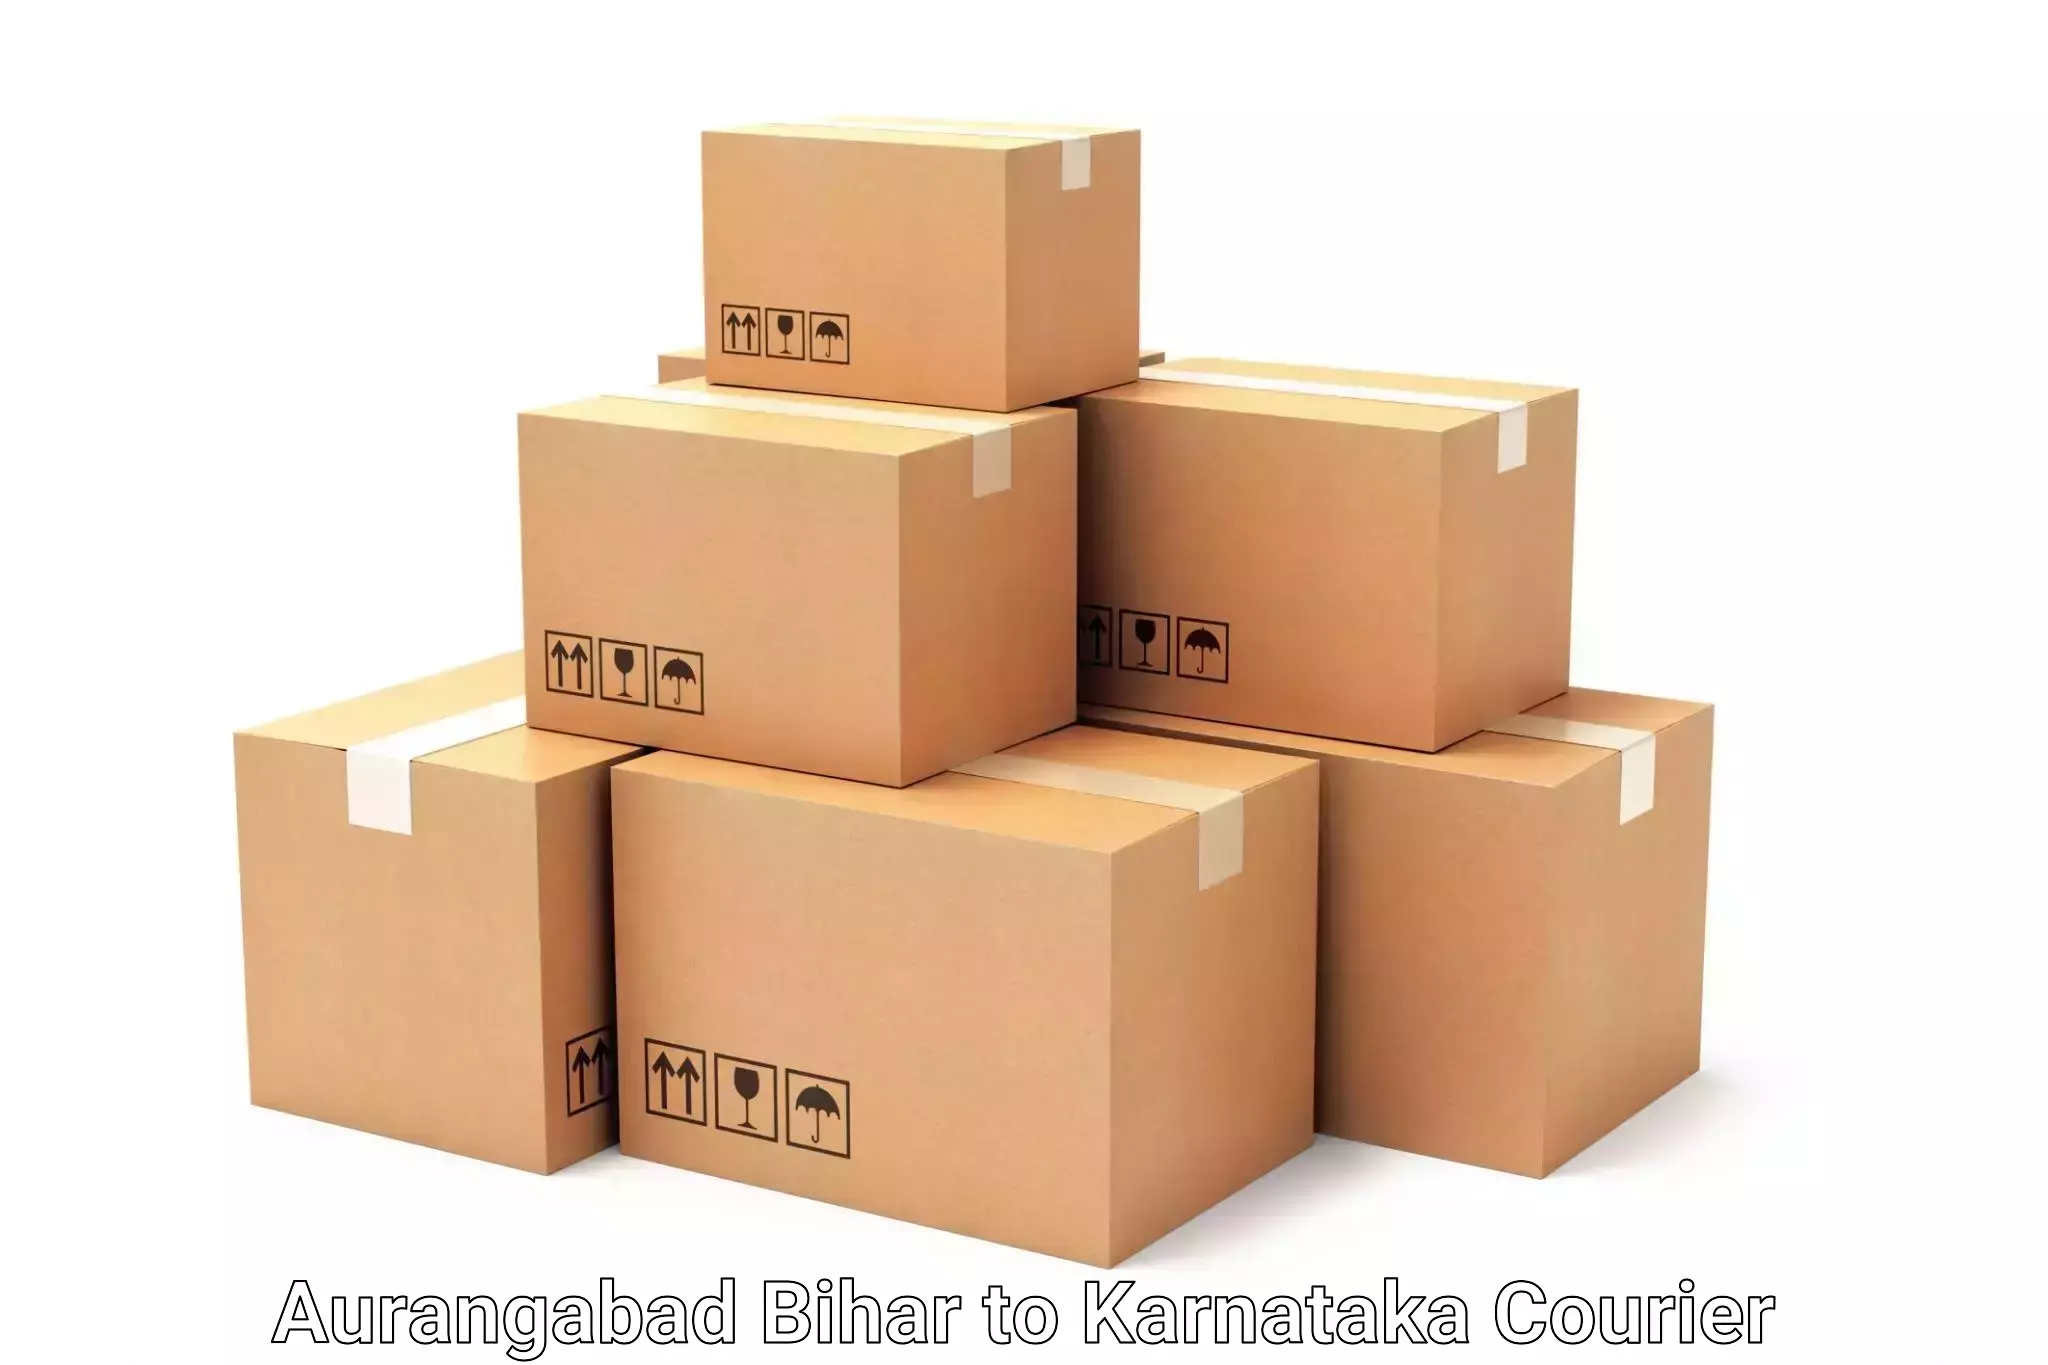 Luggage delivery operations Aurangabad Bihar to Gulbarga